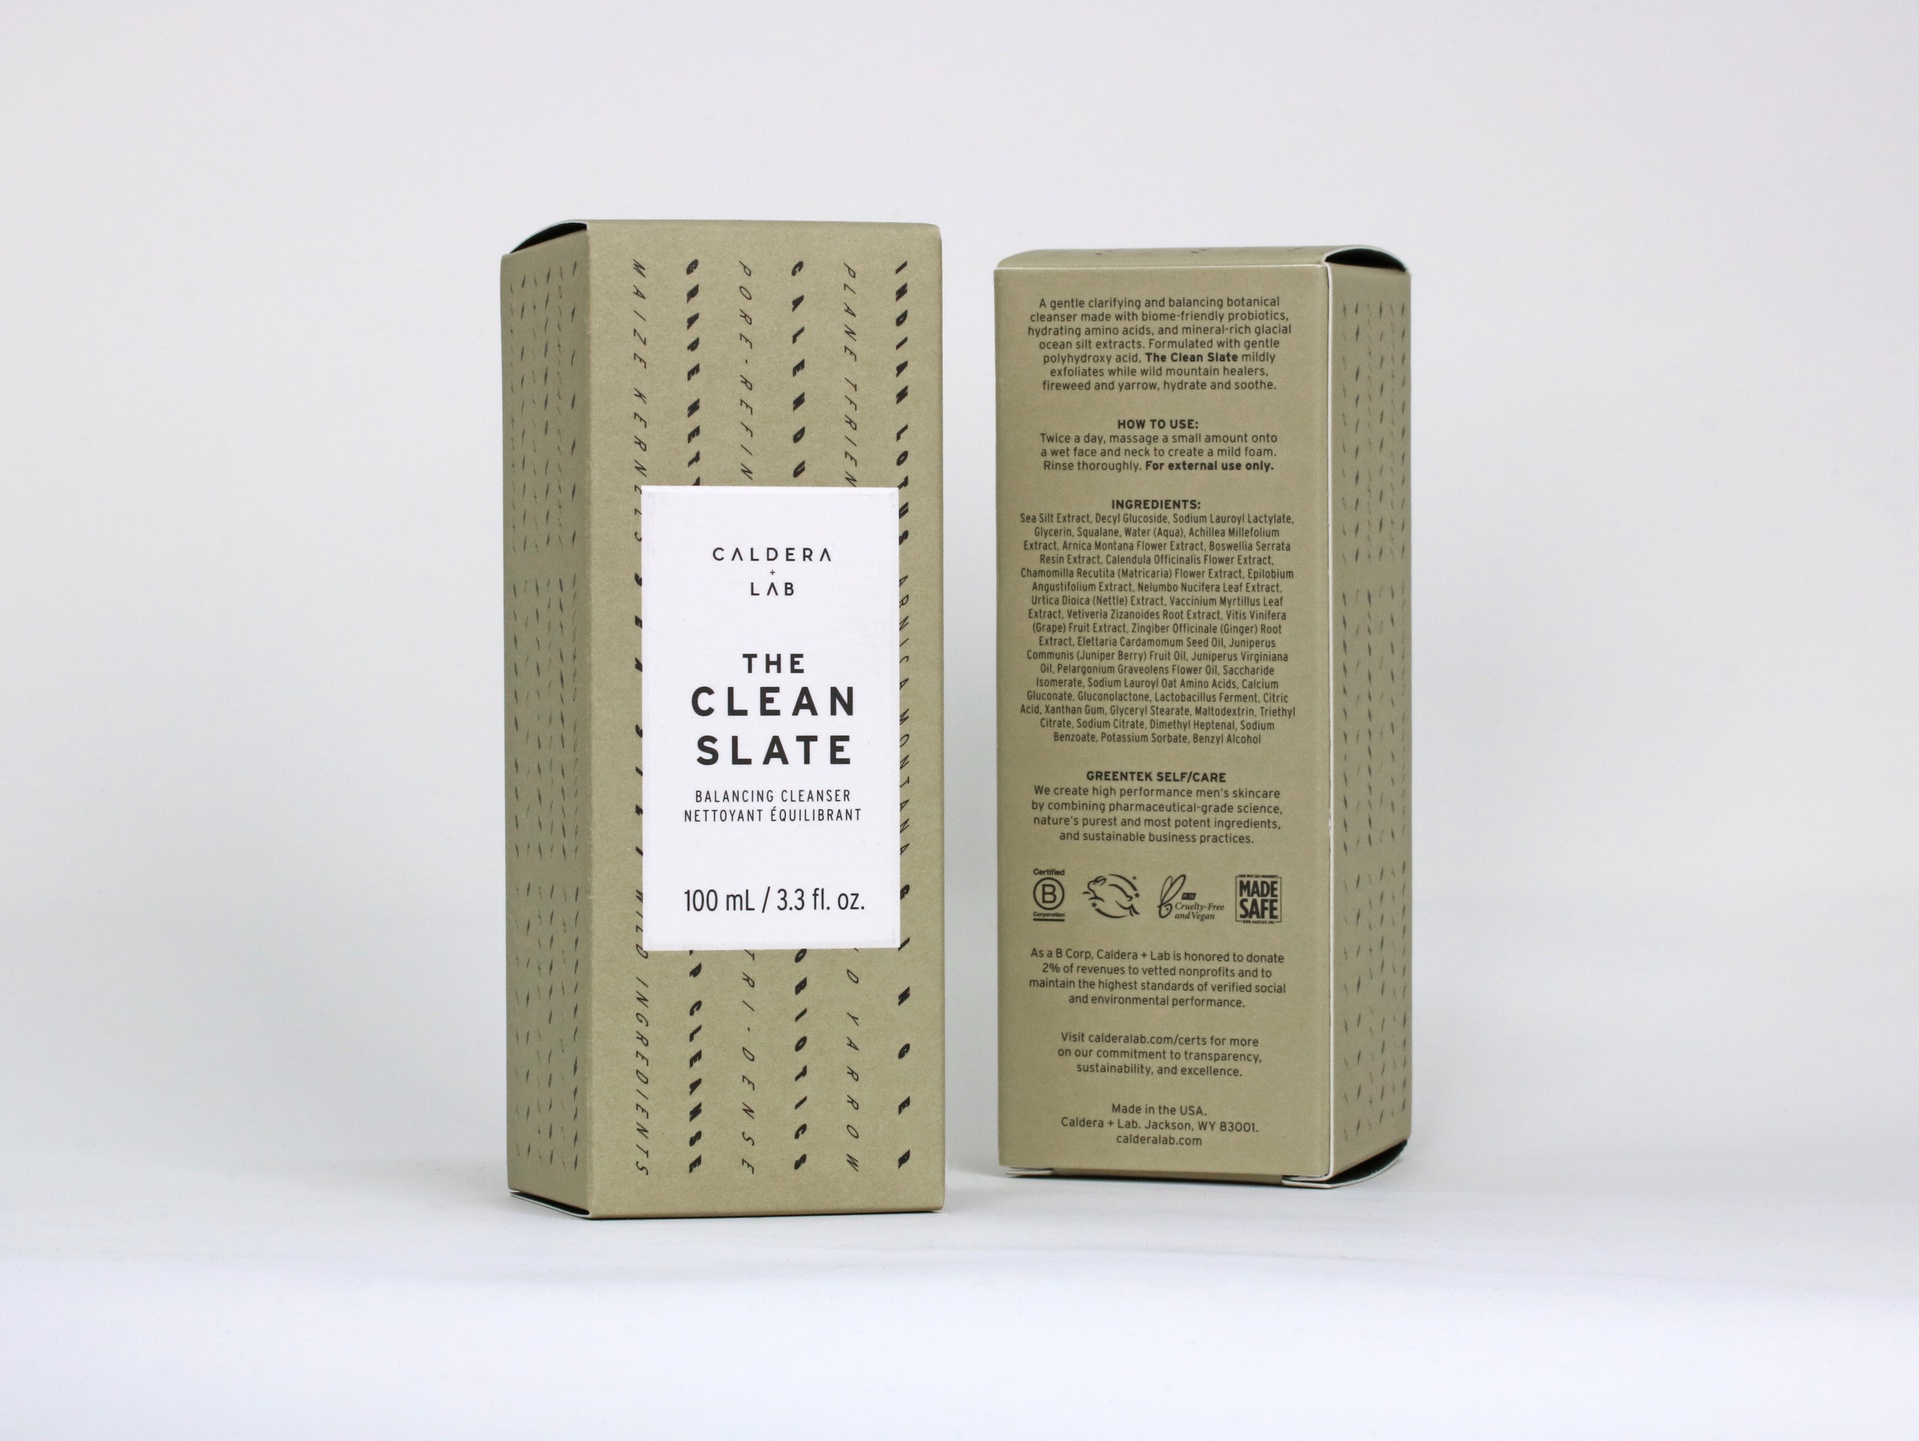 Caldera + Lab’s The Clean Slate packaging